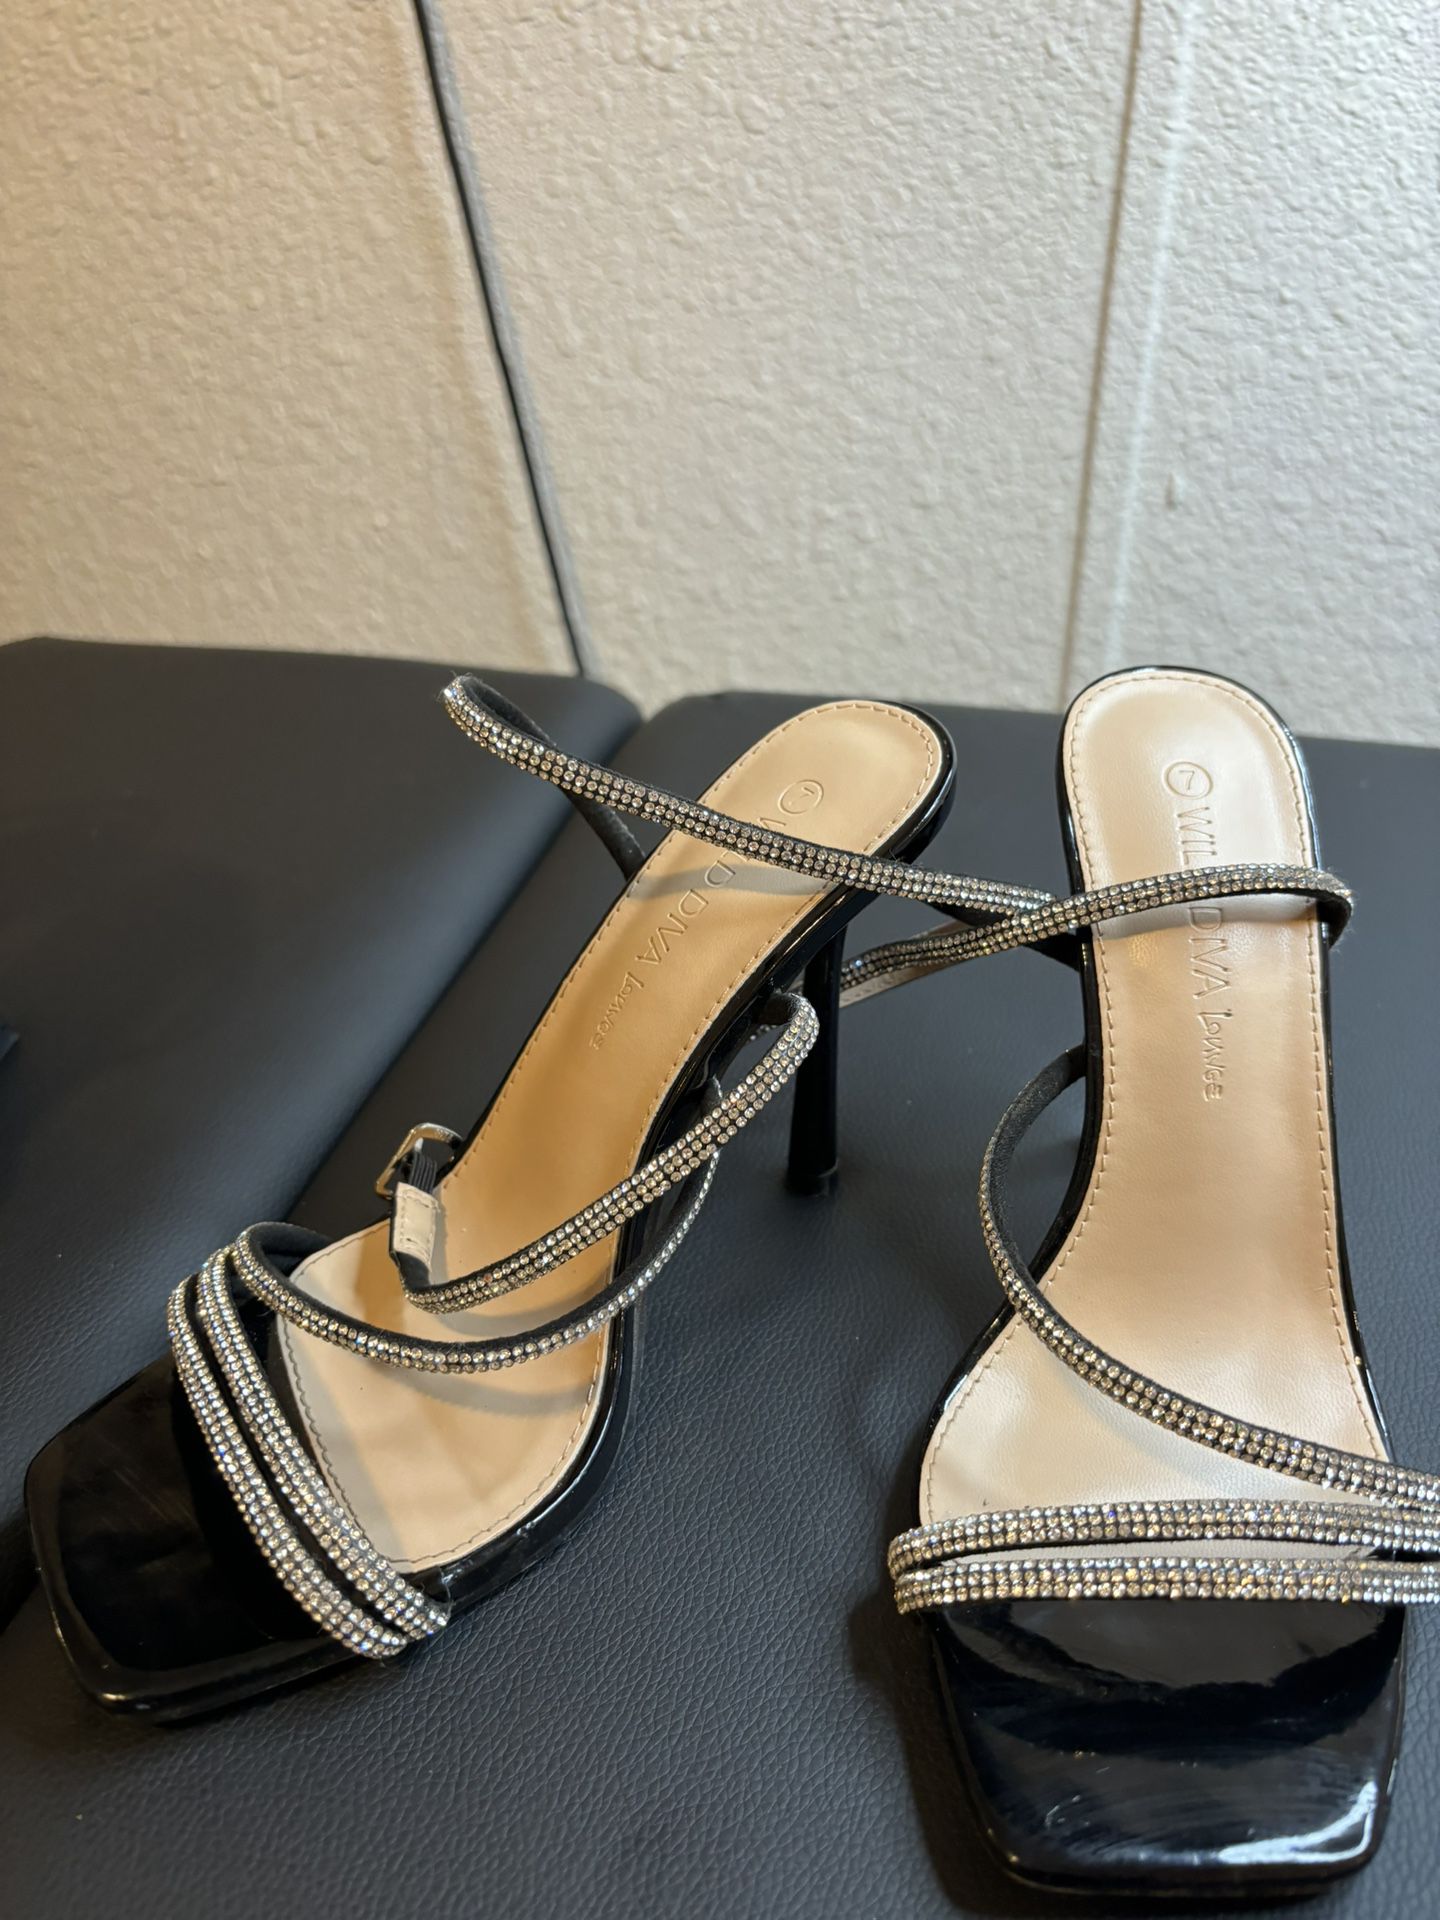 Rhinestone heels